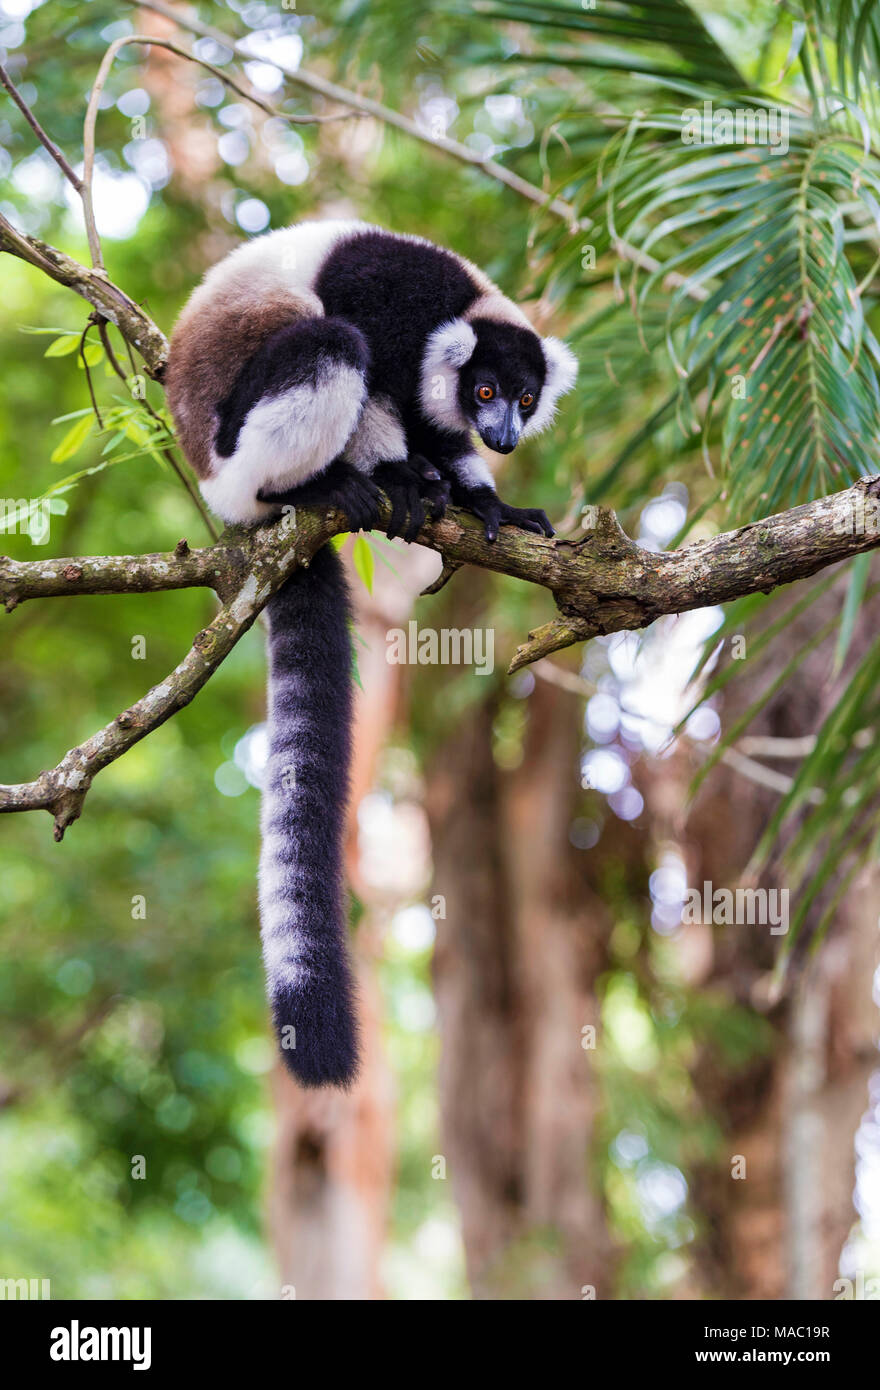 Black-and-white ruffed lemur (Lemur varecia variegata), Lemuridae family, Ankanin Ny Nofy, Madagascar Stock Photo